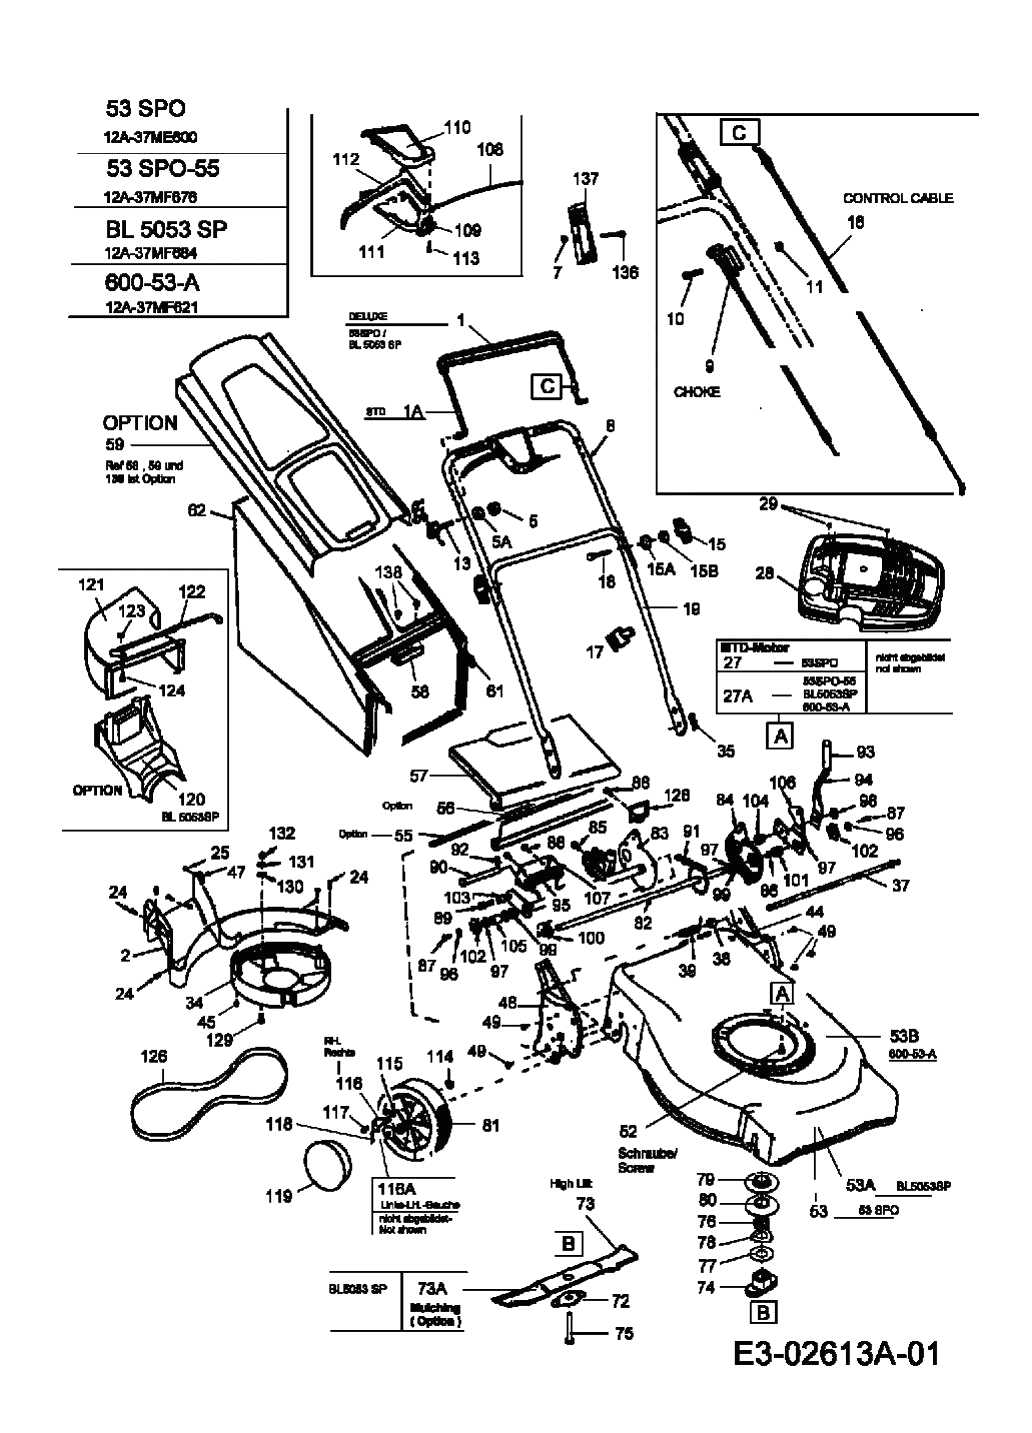 MTD Артикул 12A-37MF676 (год выпуска 2006). Основная деталировка